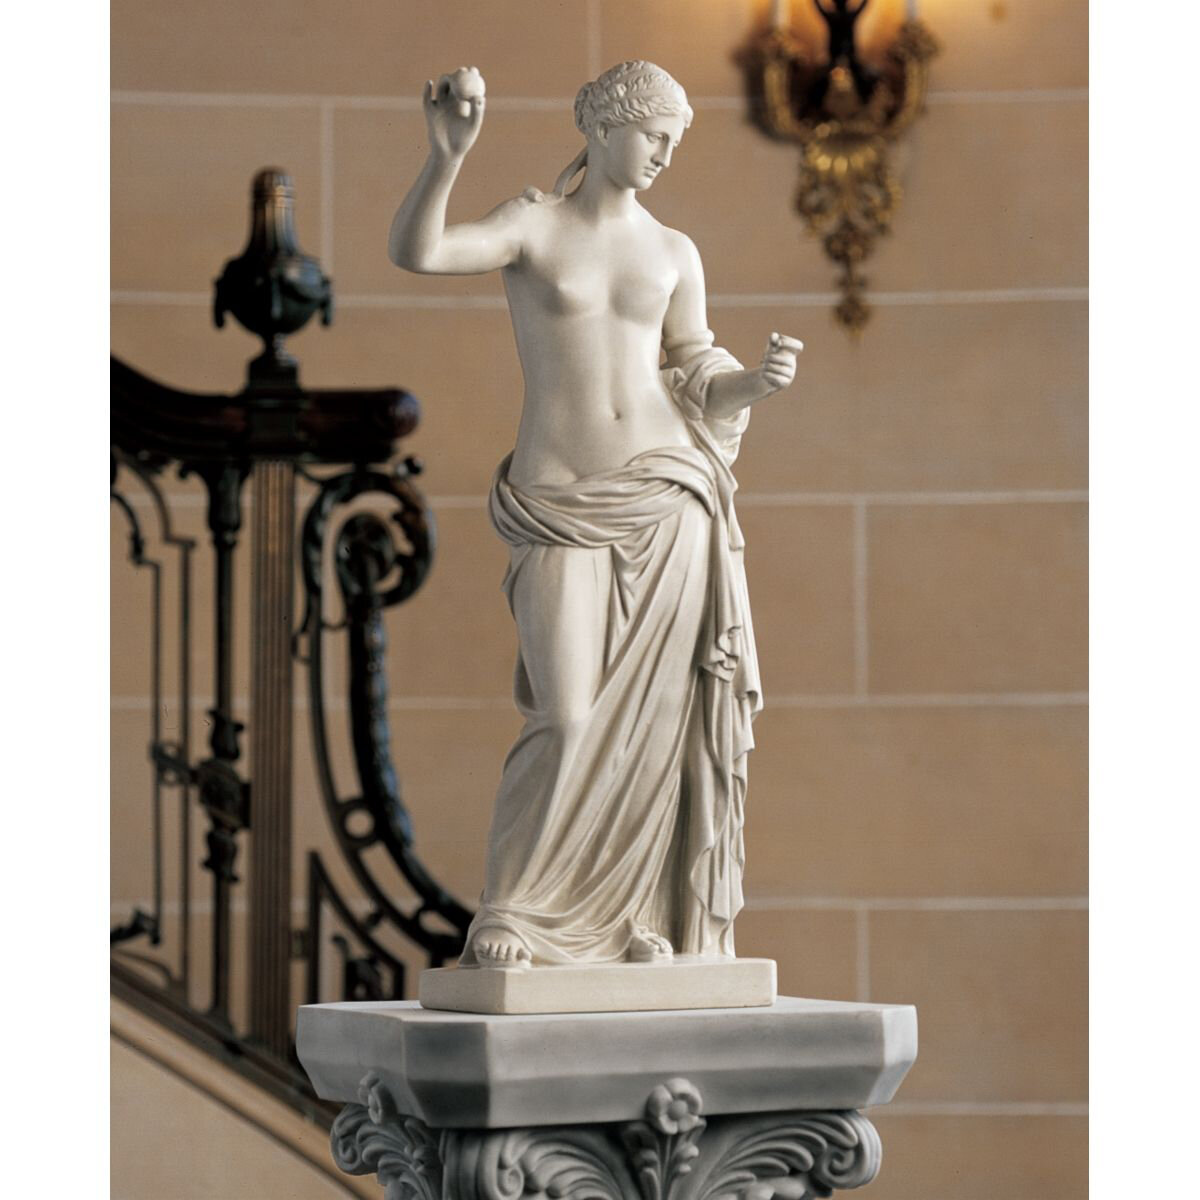 Design Toscano Venus of Arles Gallery Statue in White 